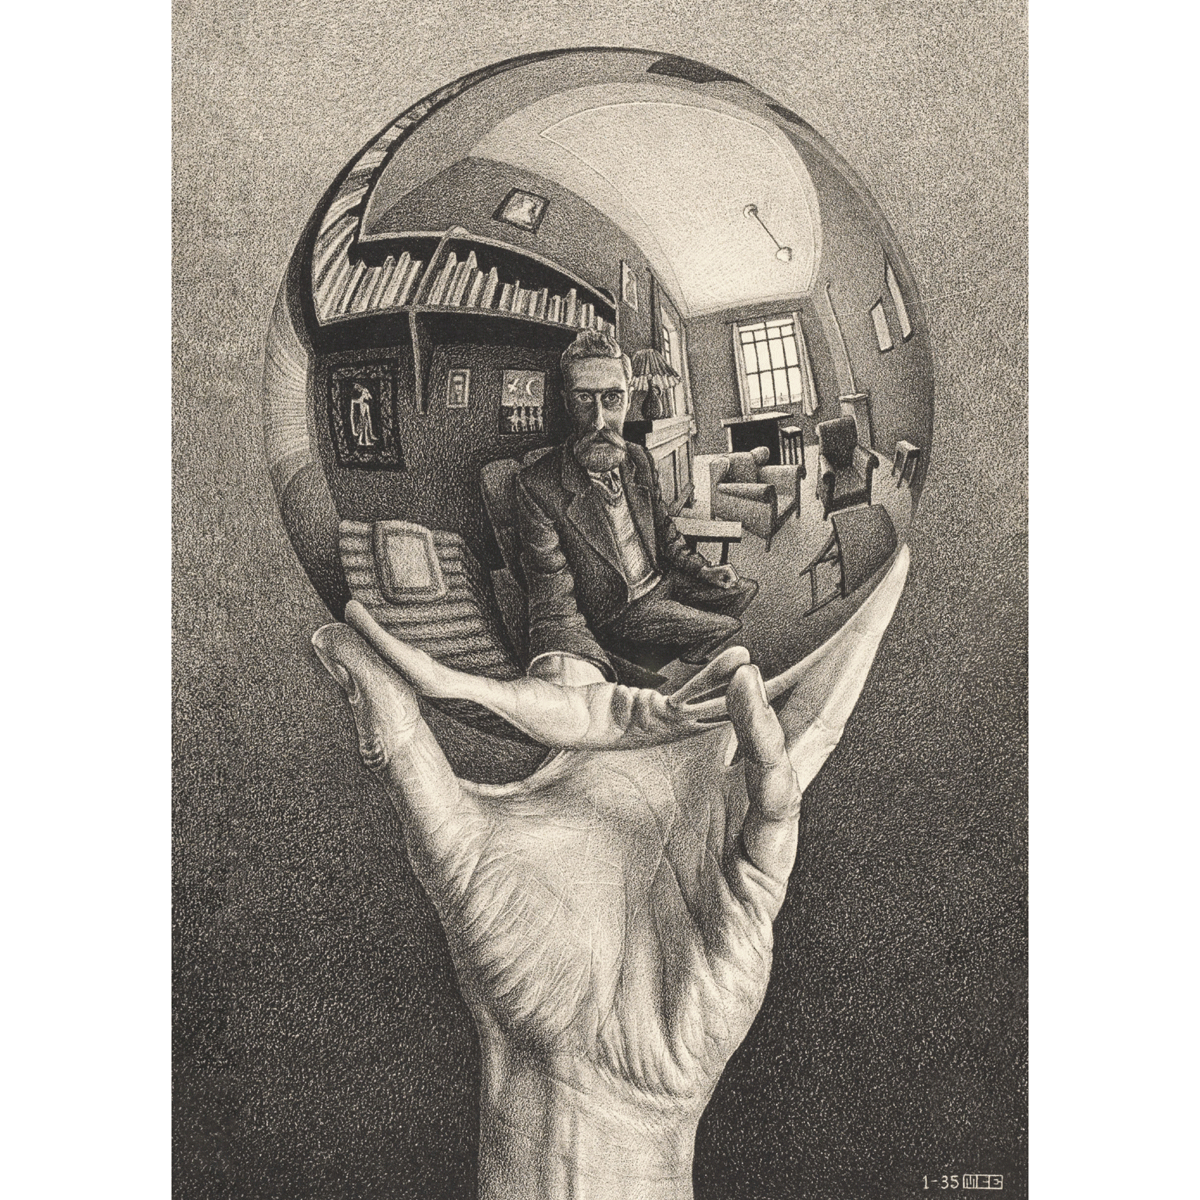 Clementoni puzzle novo art series - m. c. escher, "hand with reflecting sphere" - 1000 pezzi, puzzle adulti - CLEMENTONI